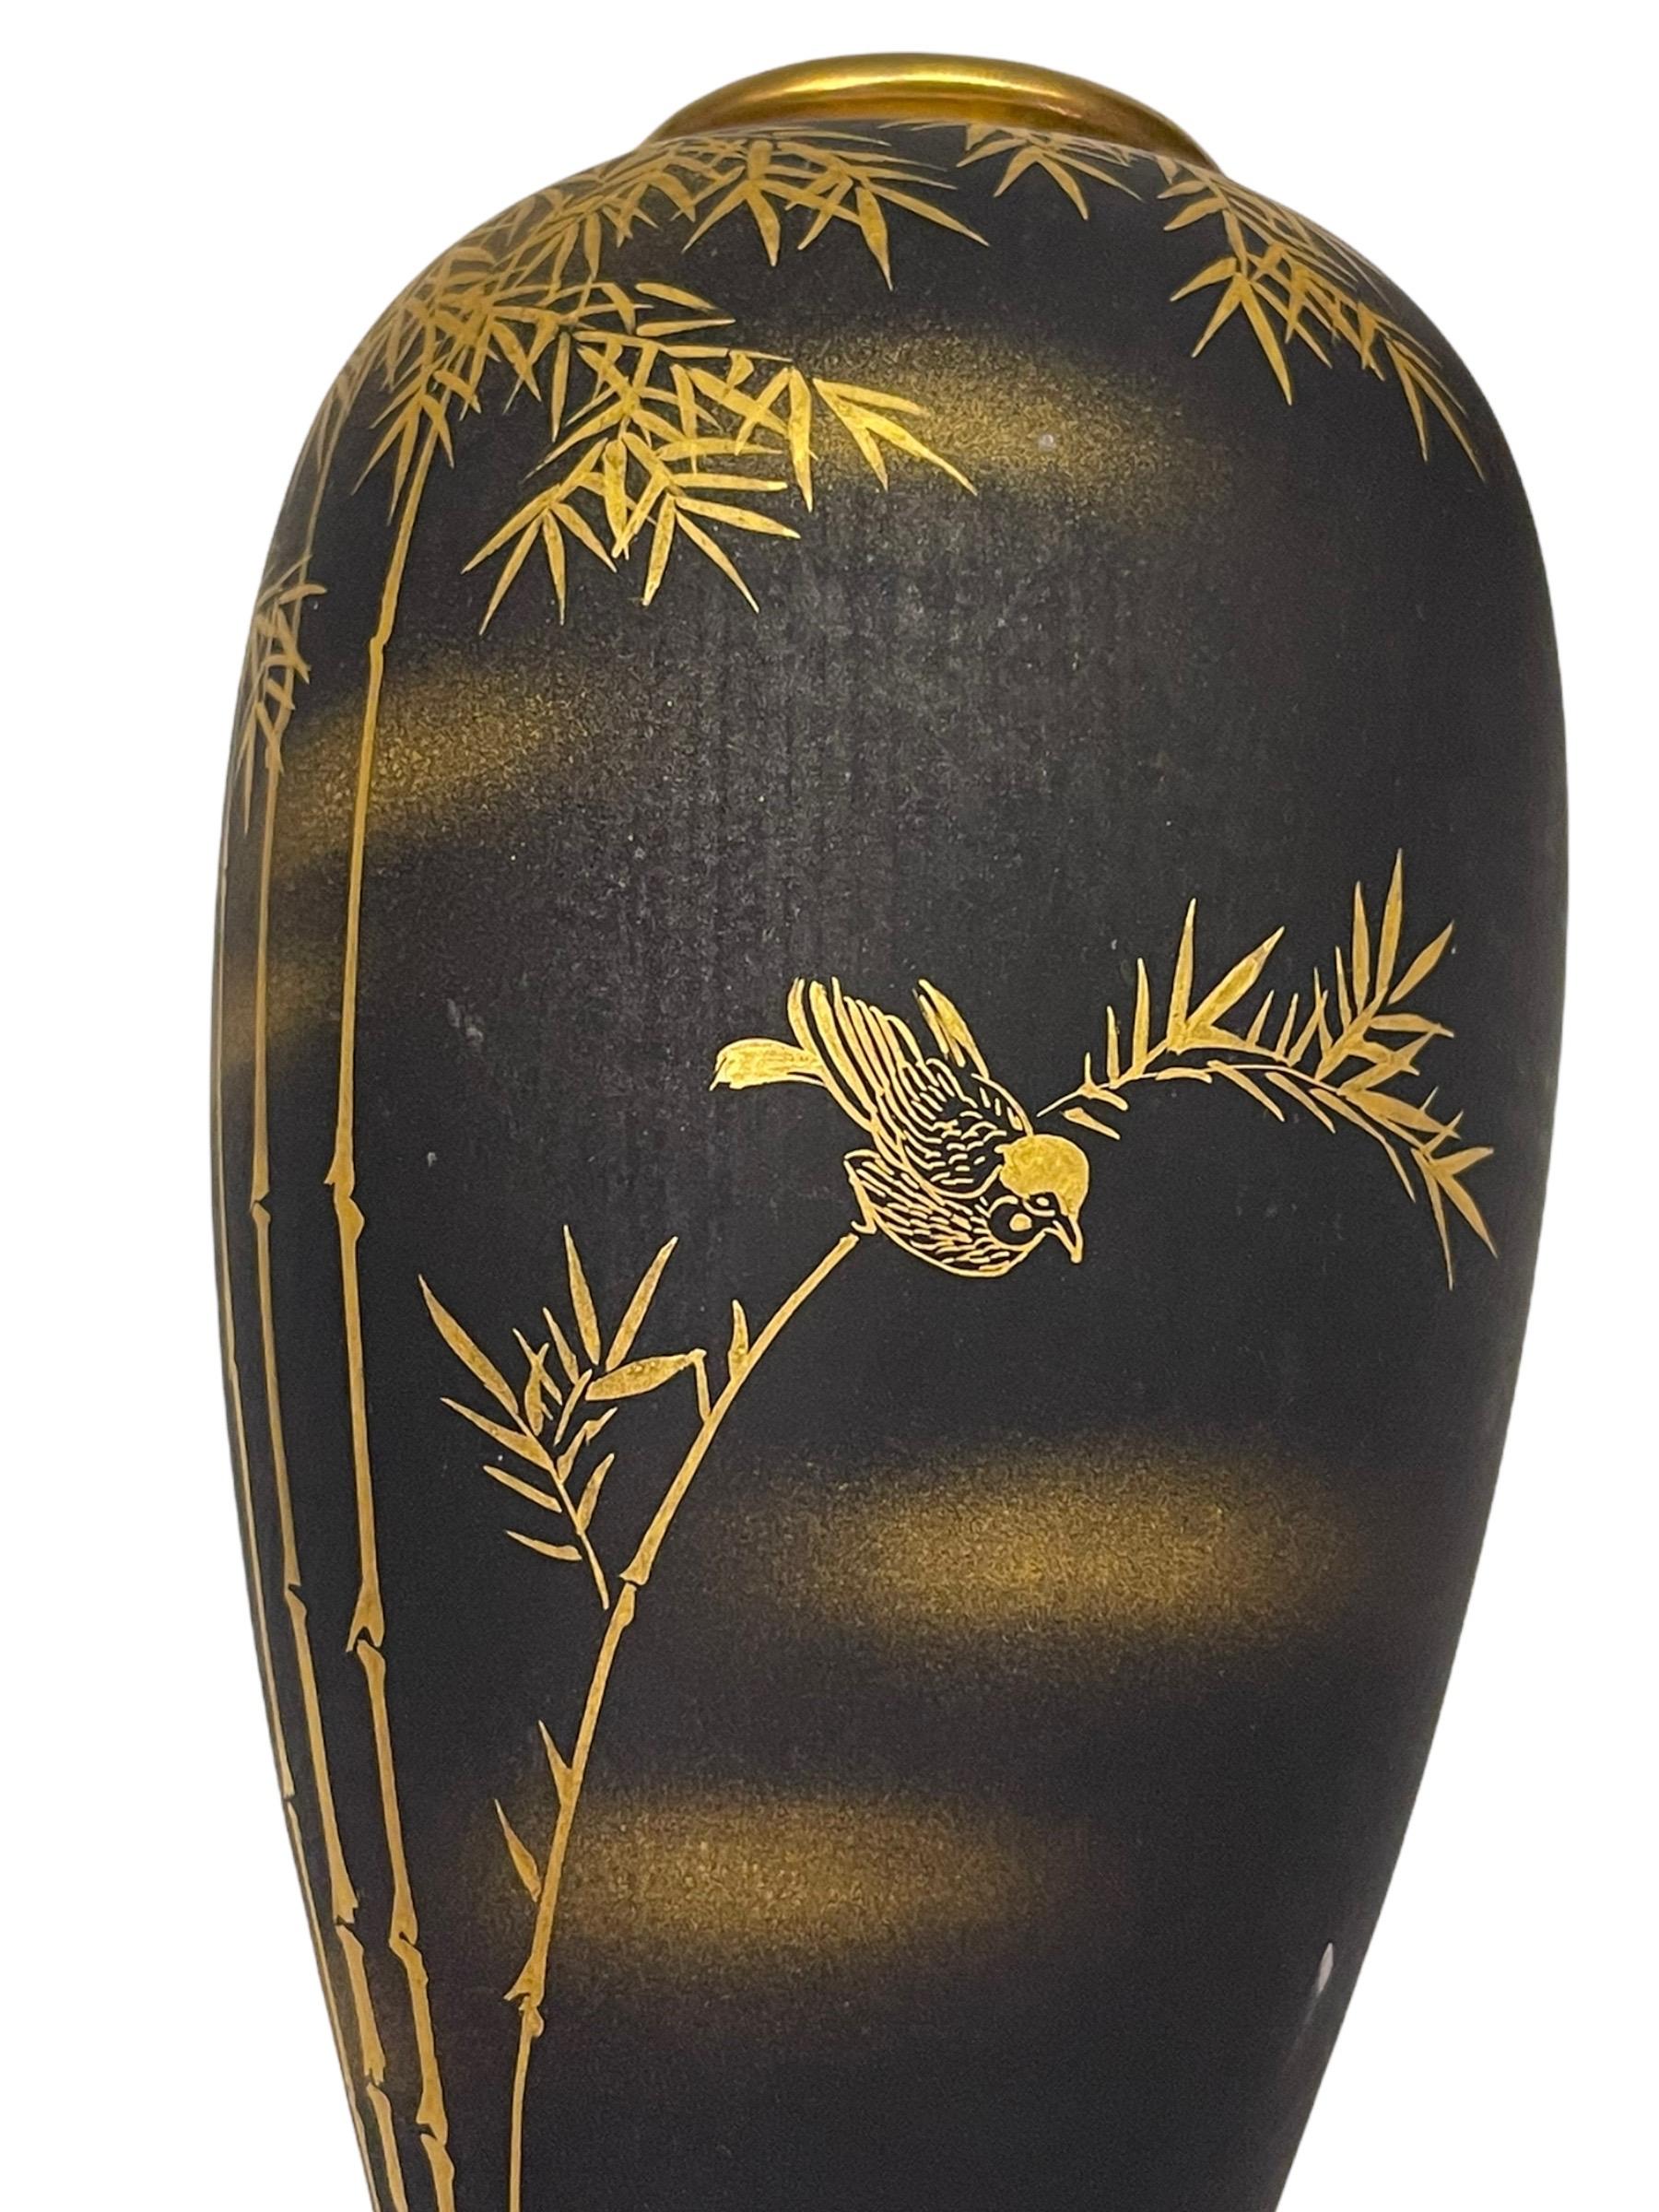 kutani vase made in japan